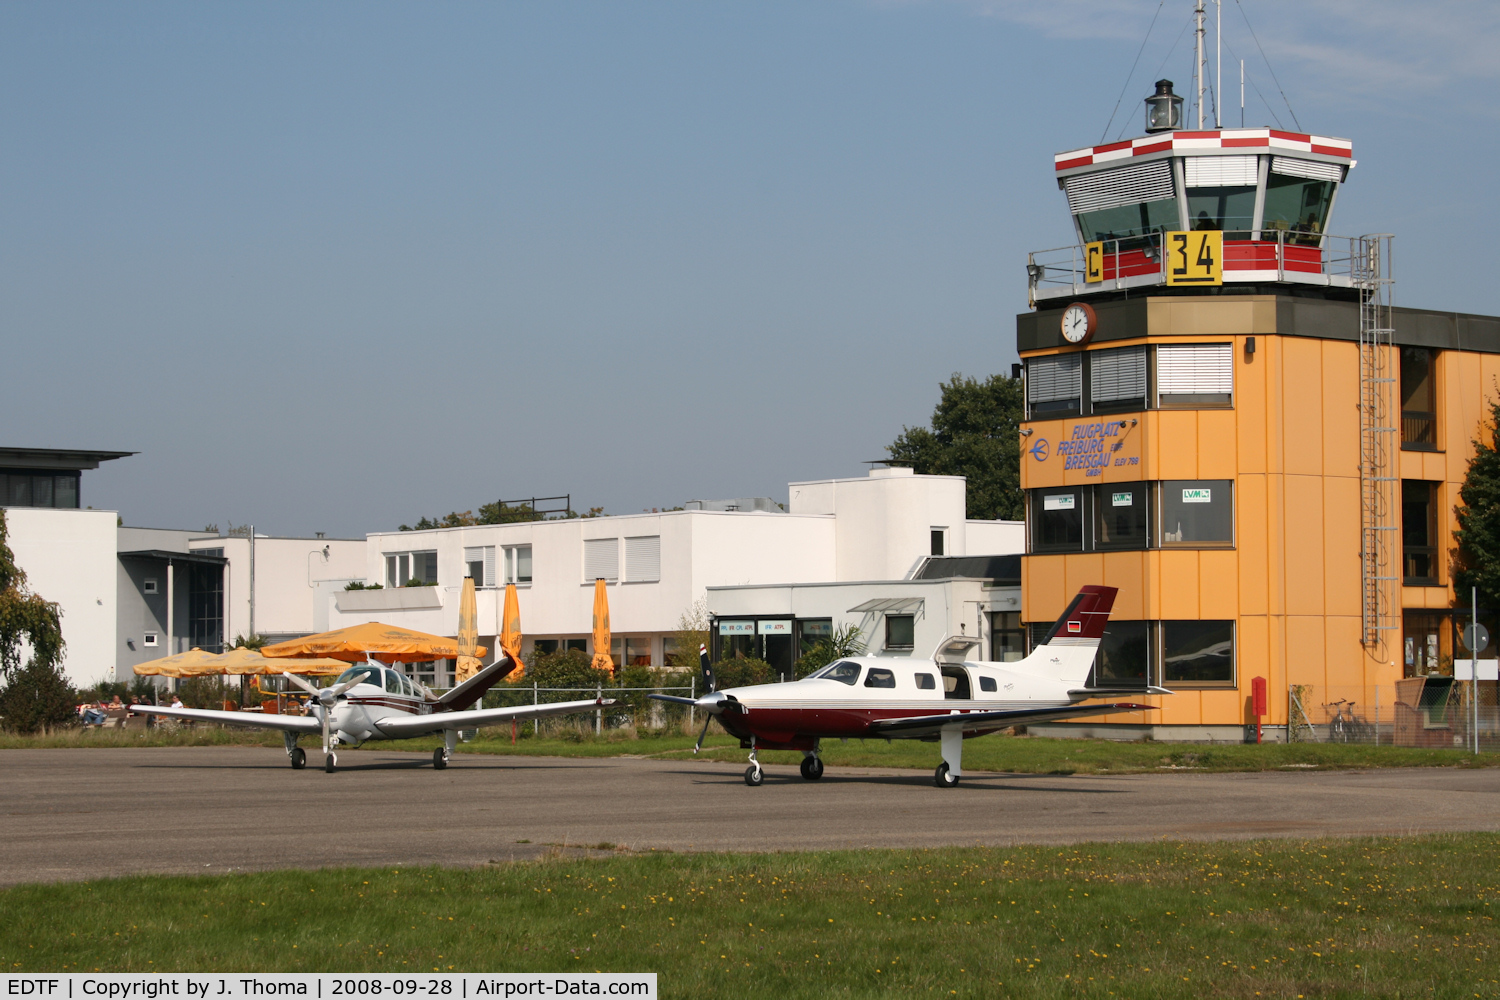 Flugplatz Freiburg Airfield Airport, Freiburg/Breisgau, Baden-Württemberg Germany (EDTF) - Freiburg EDTF - Apron